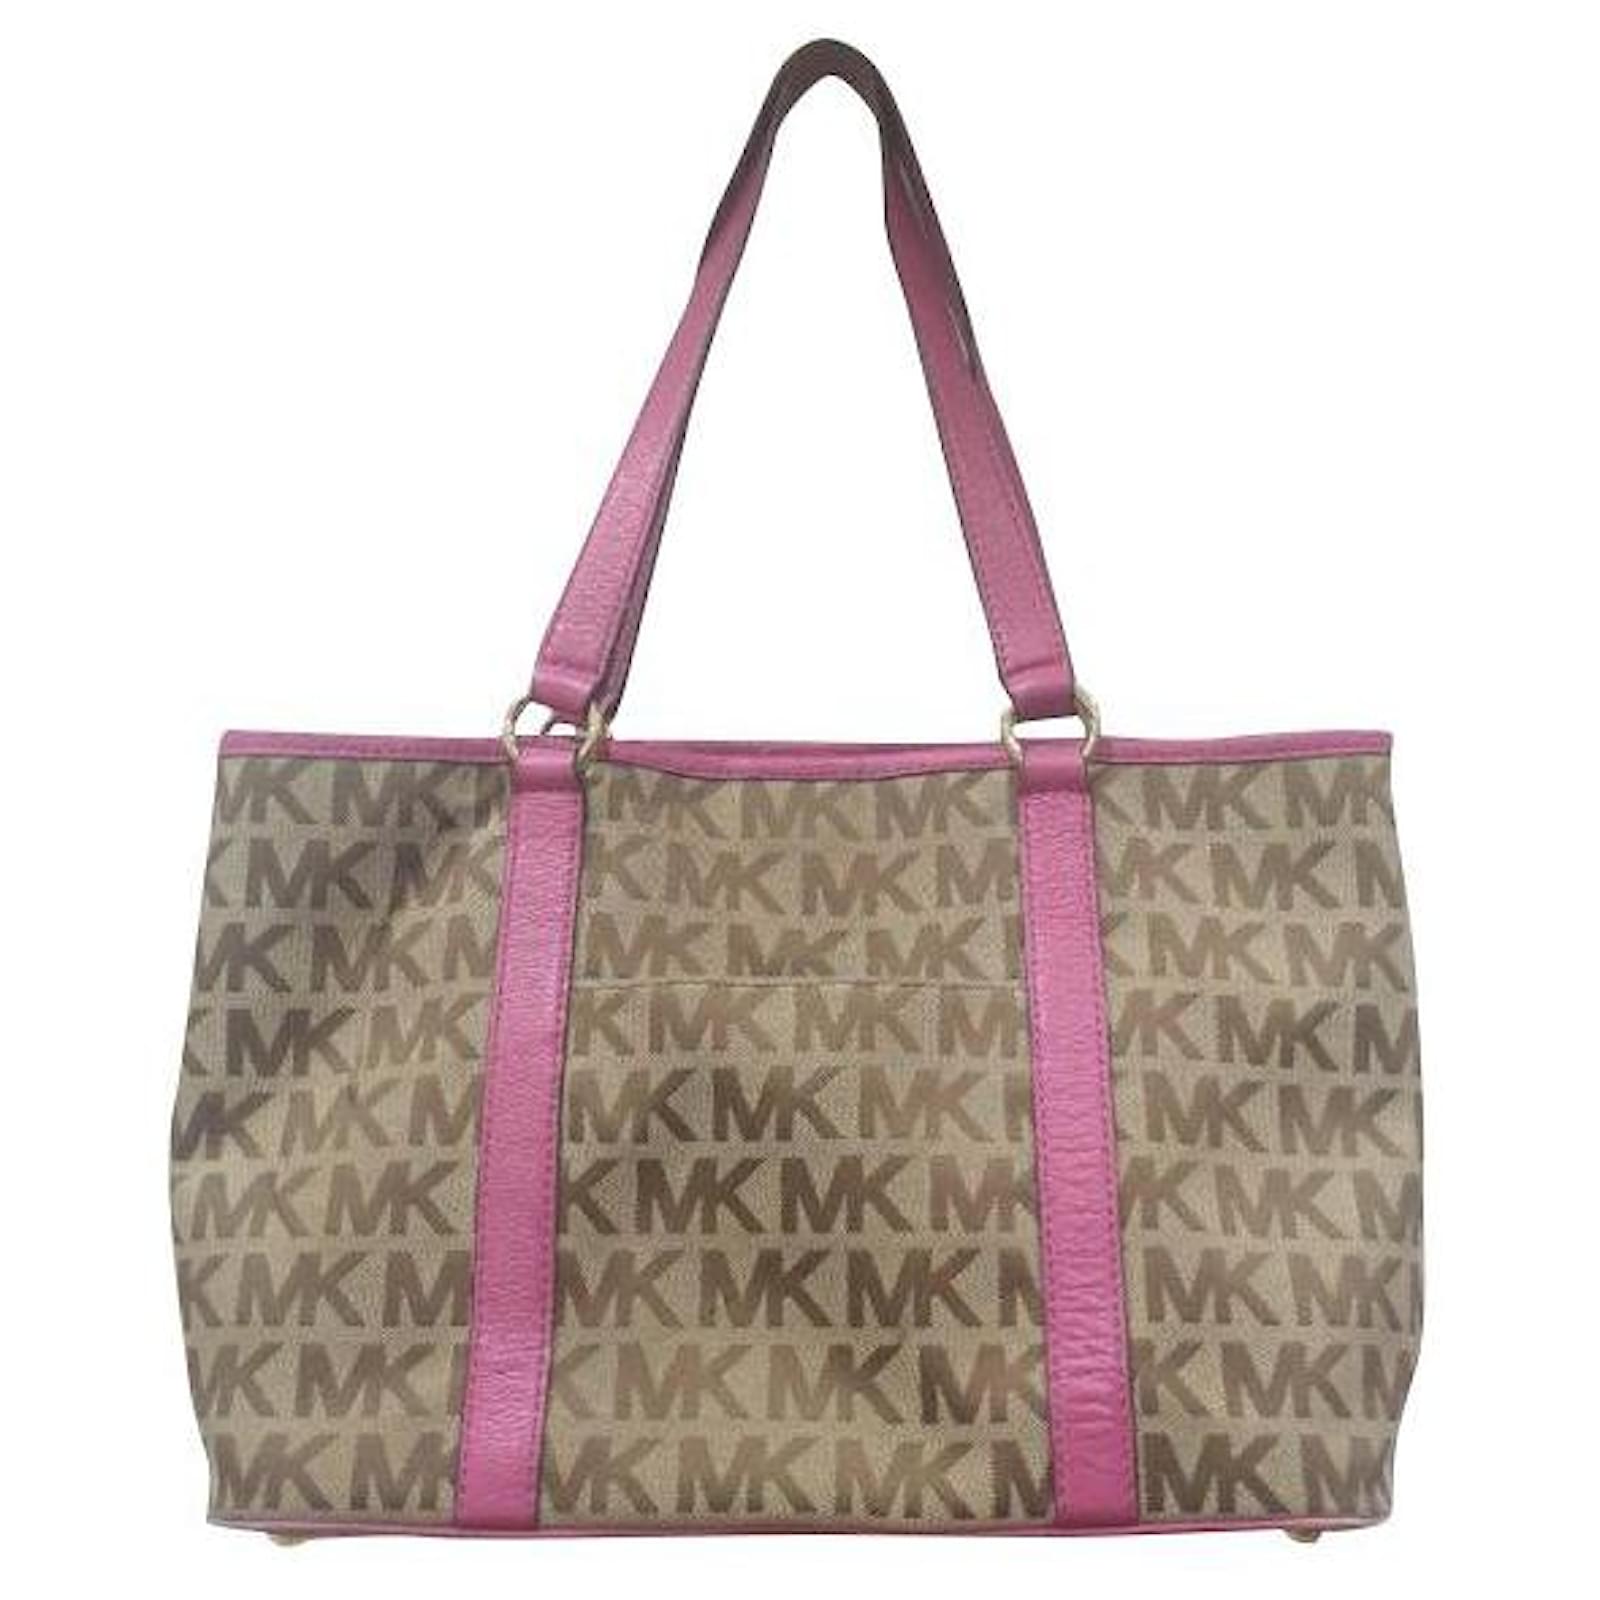 Mk purse - Women's handbags